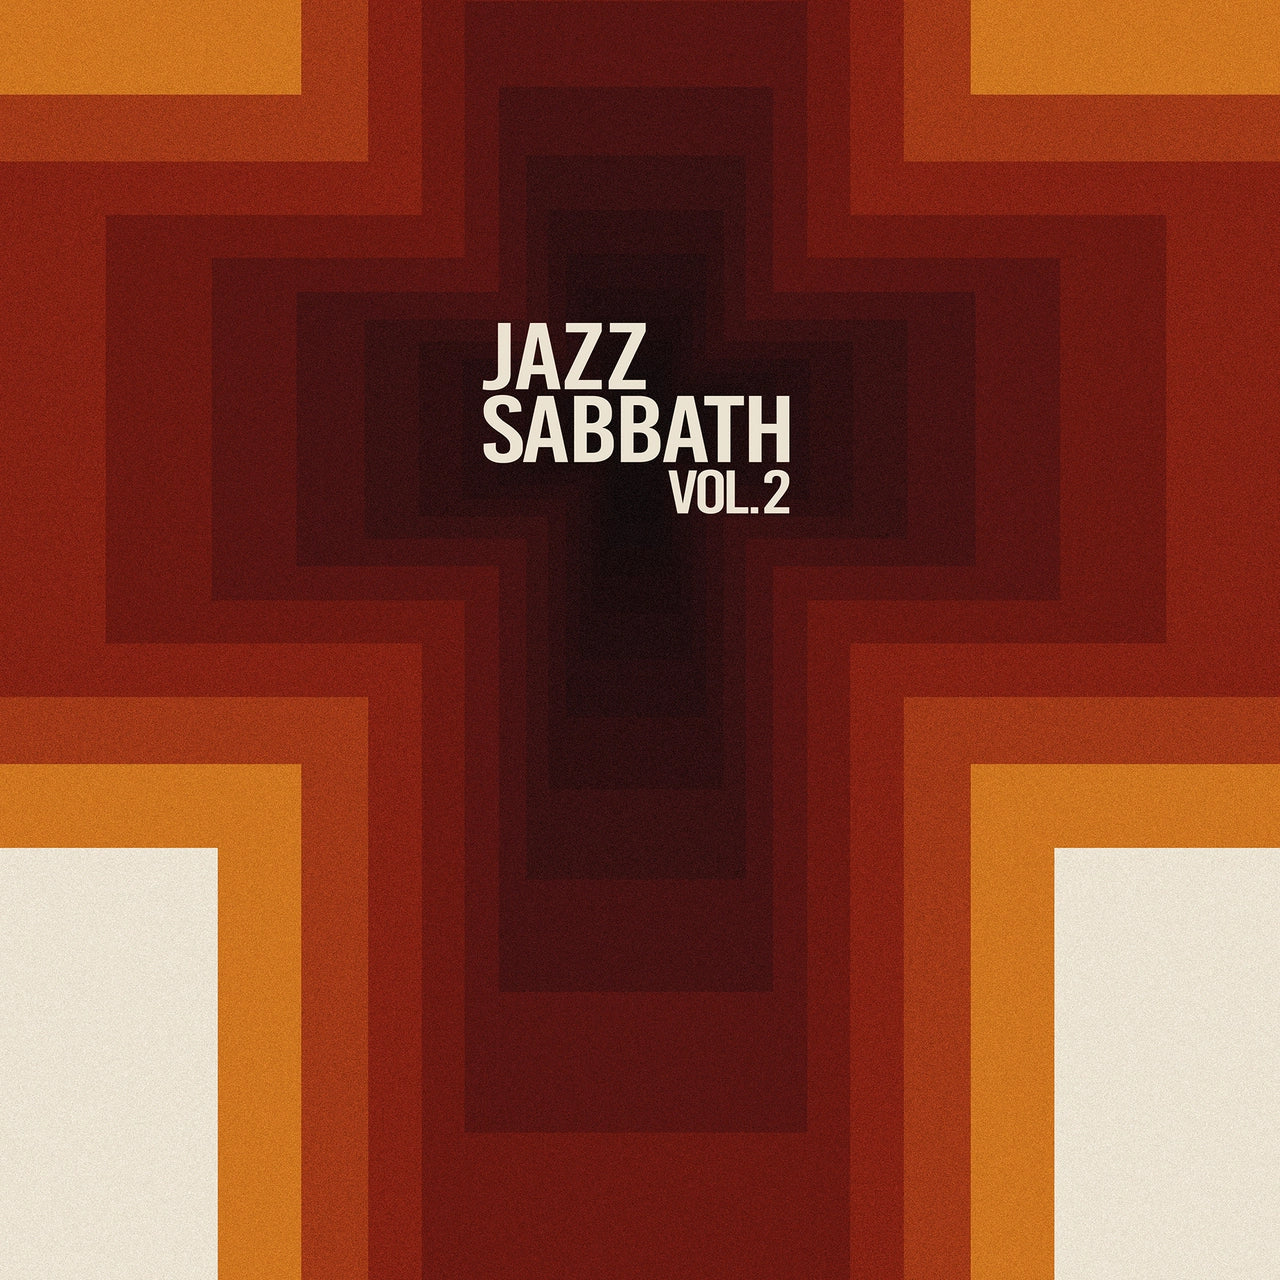 Jazz Sabbath - Vol. 2  (Black Vinyl, STEREO edition, jazz covers of Black Sabbath classics)